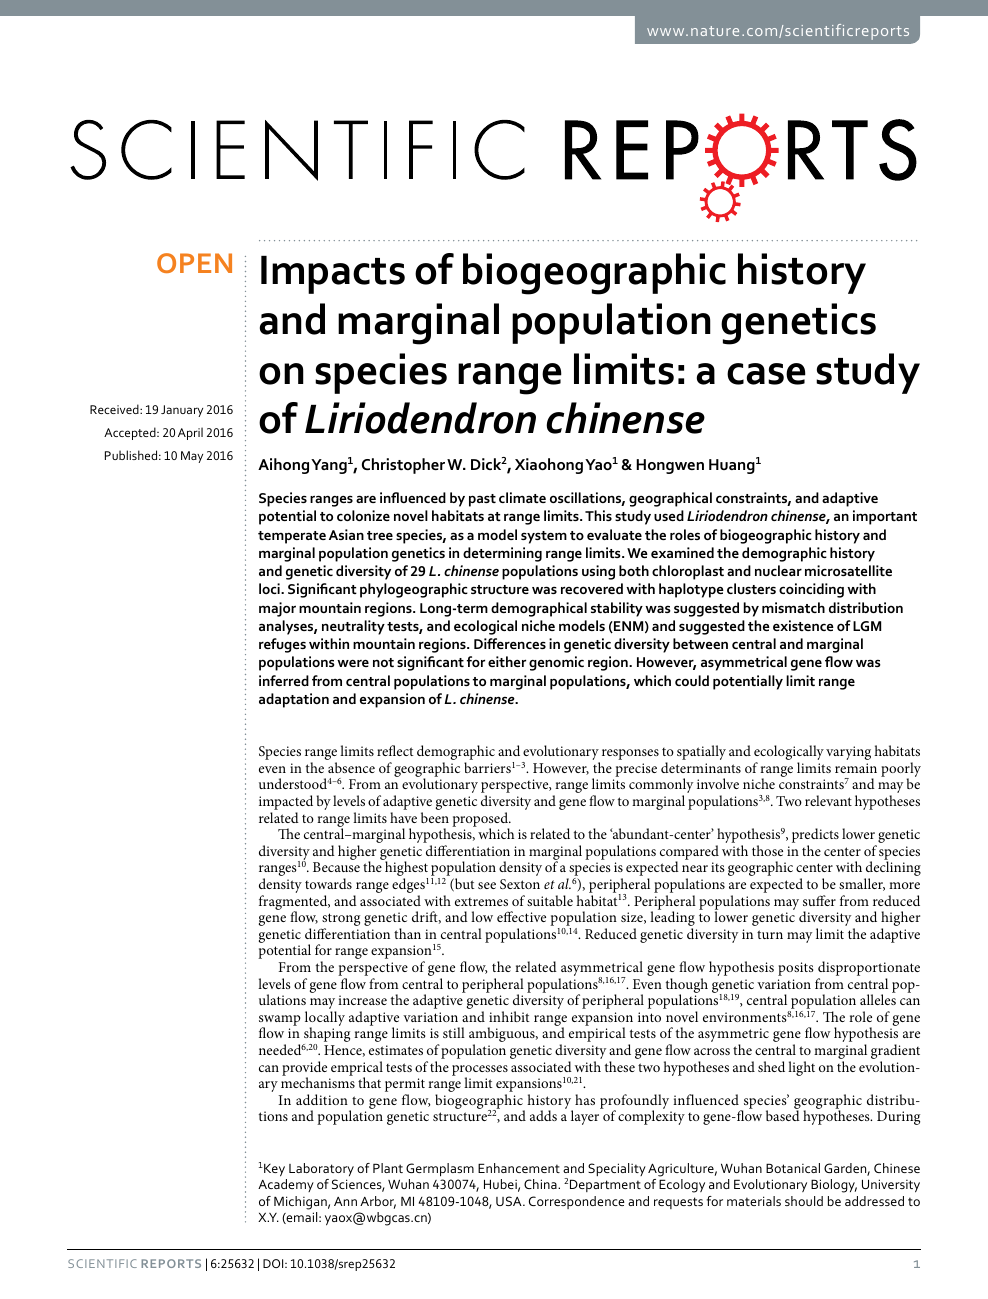 Impacts Of Biogeographic History And Marginal Population Genetics